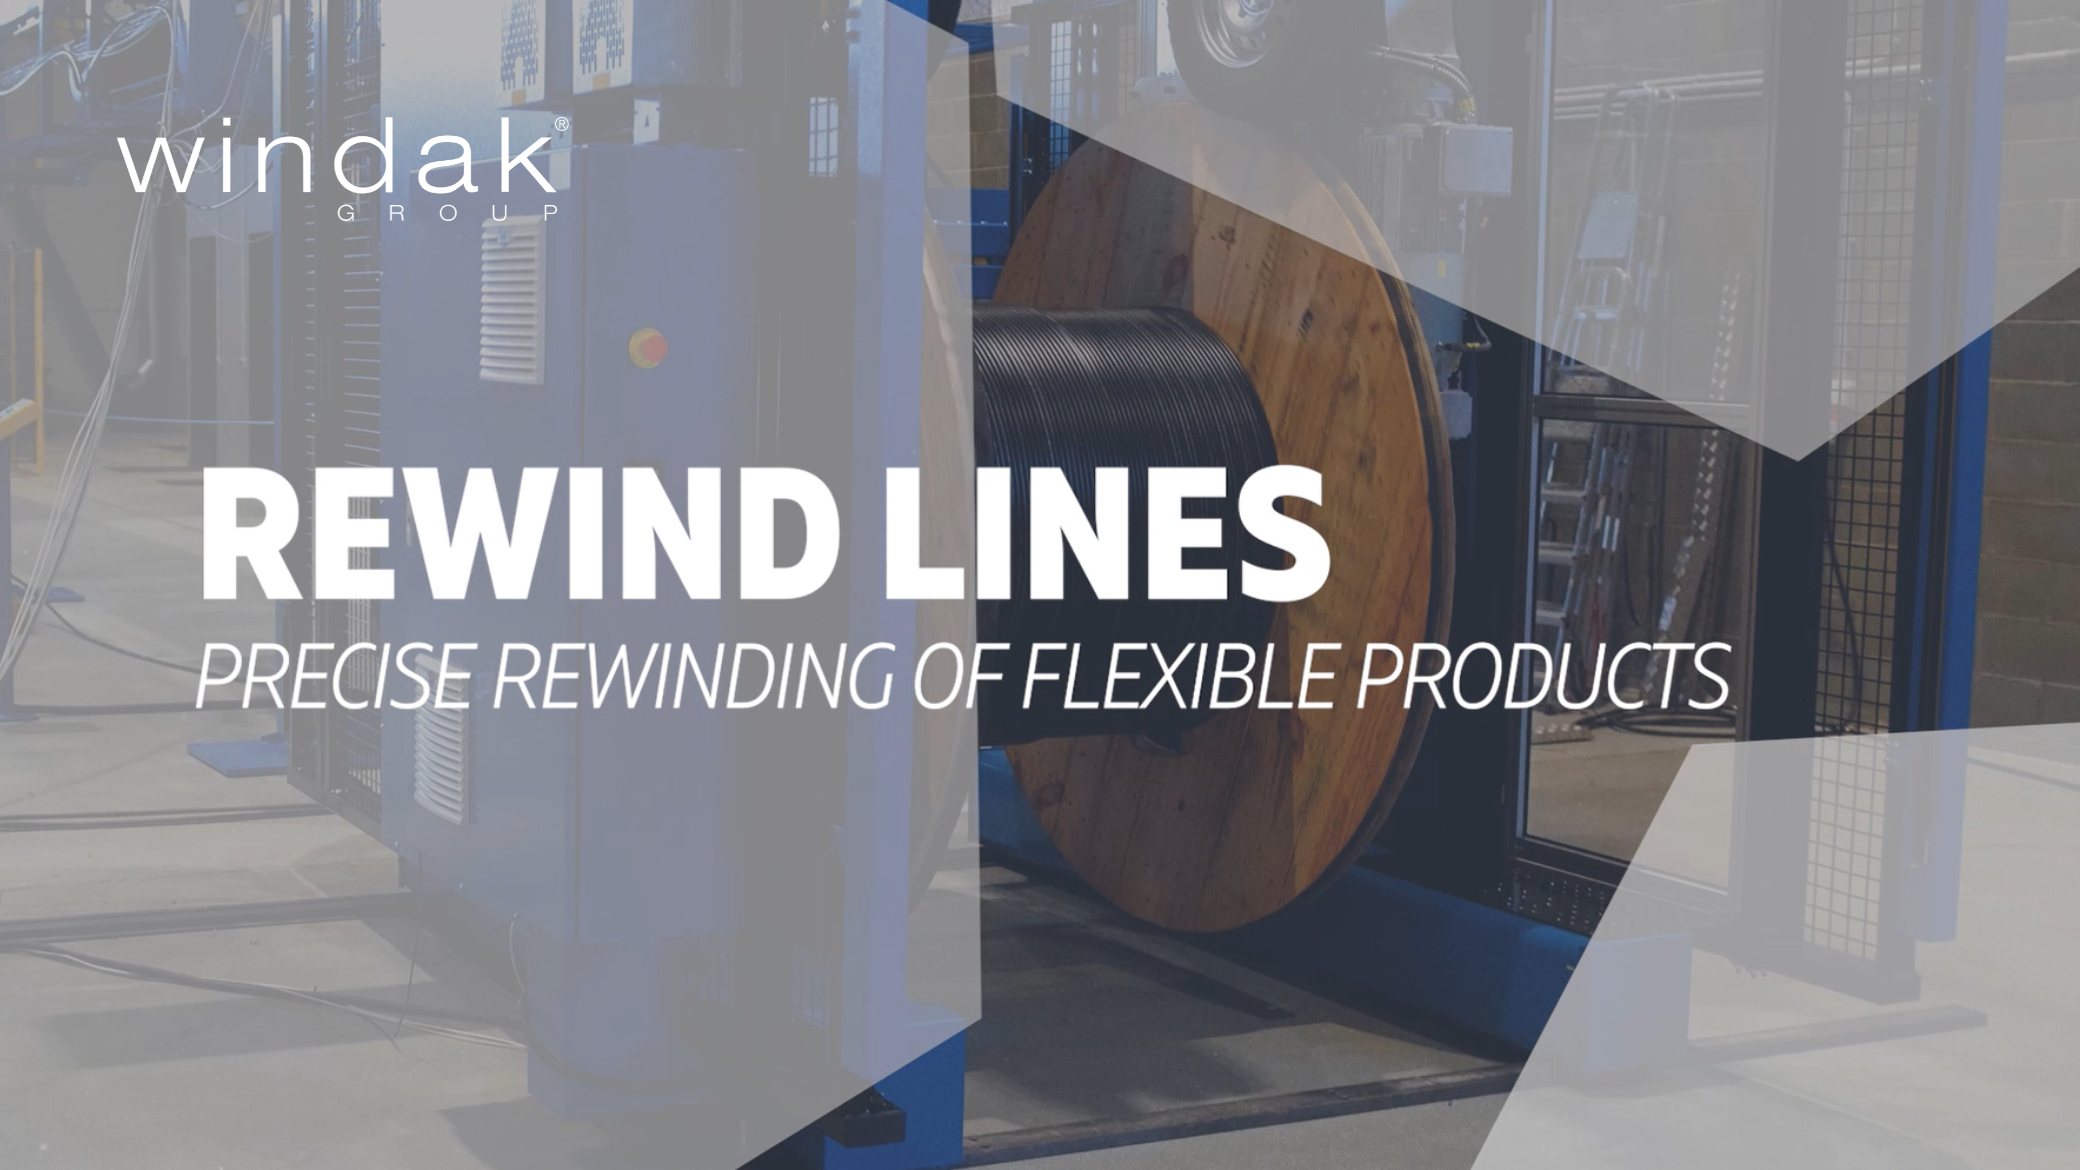 Windak’s Rewind Lines